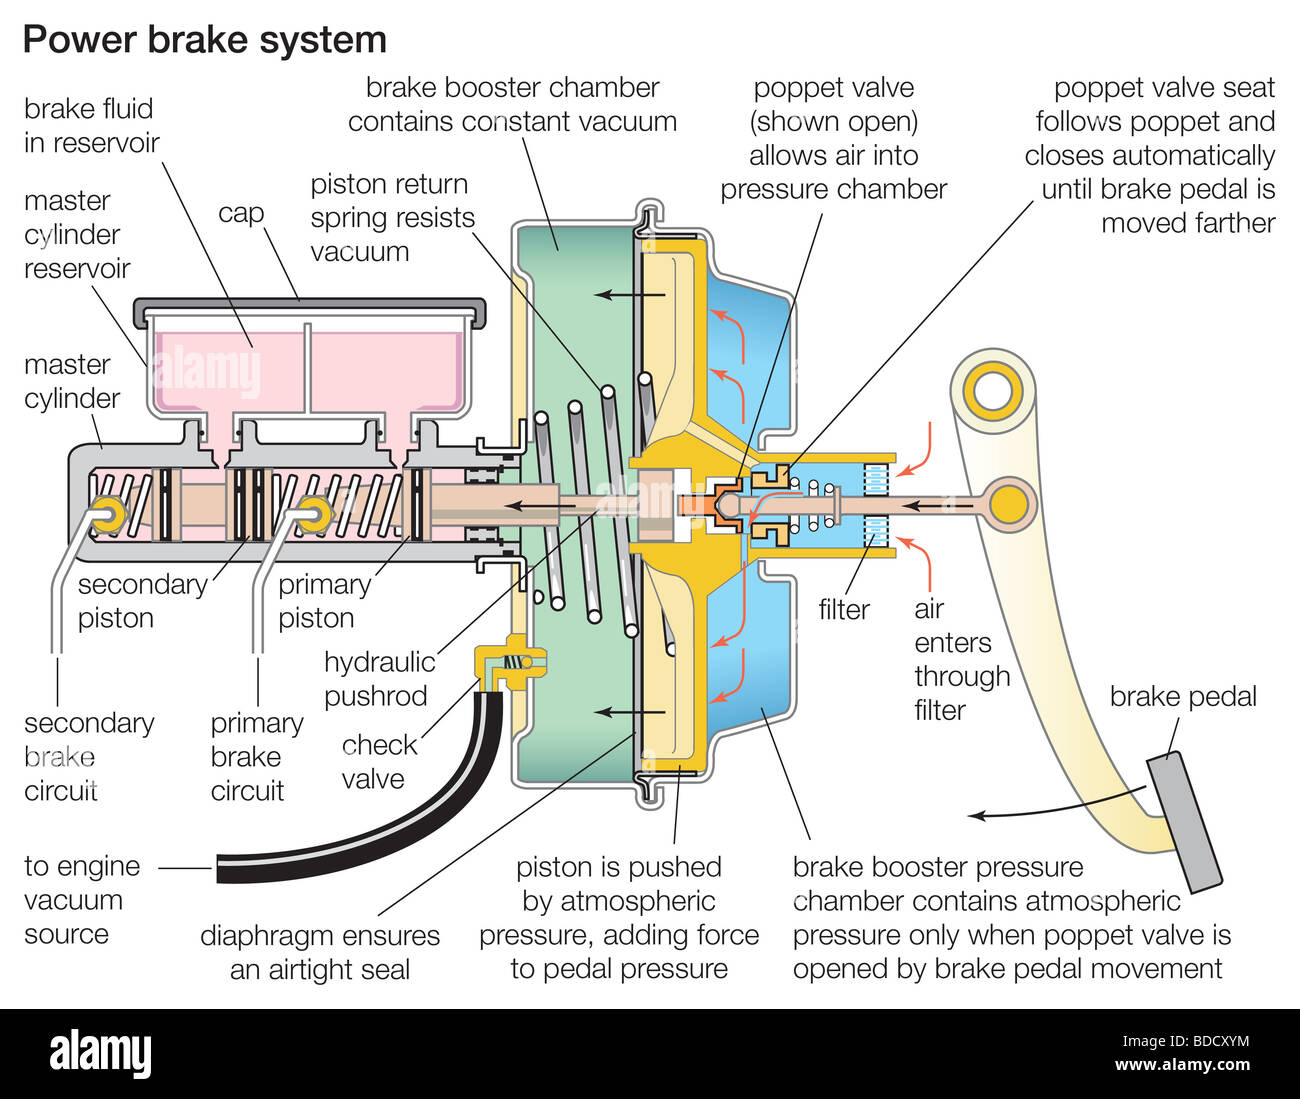 Power brake system Stock Photo: 25485480 - Alamy